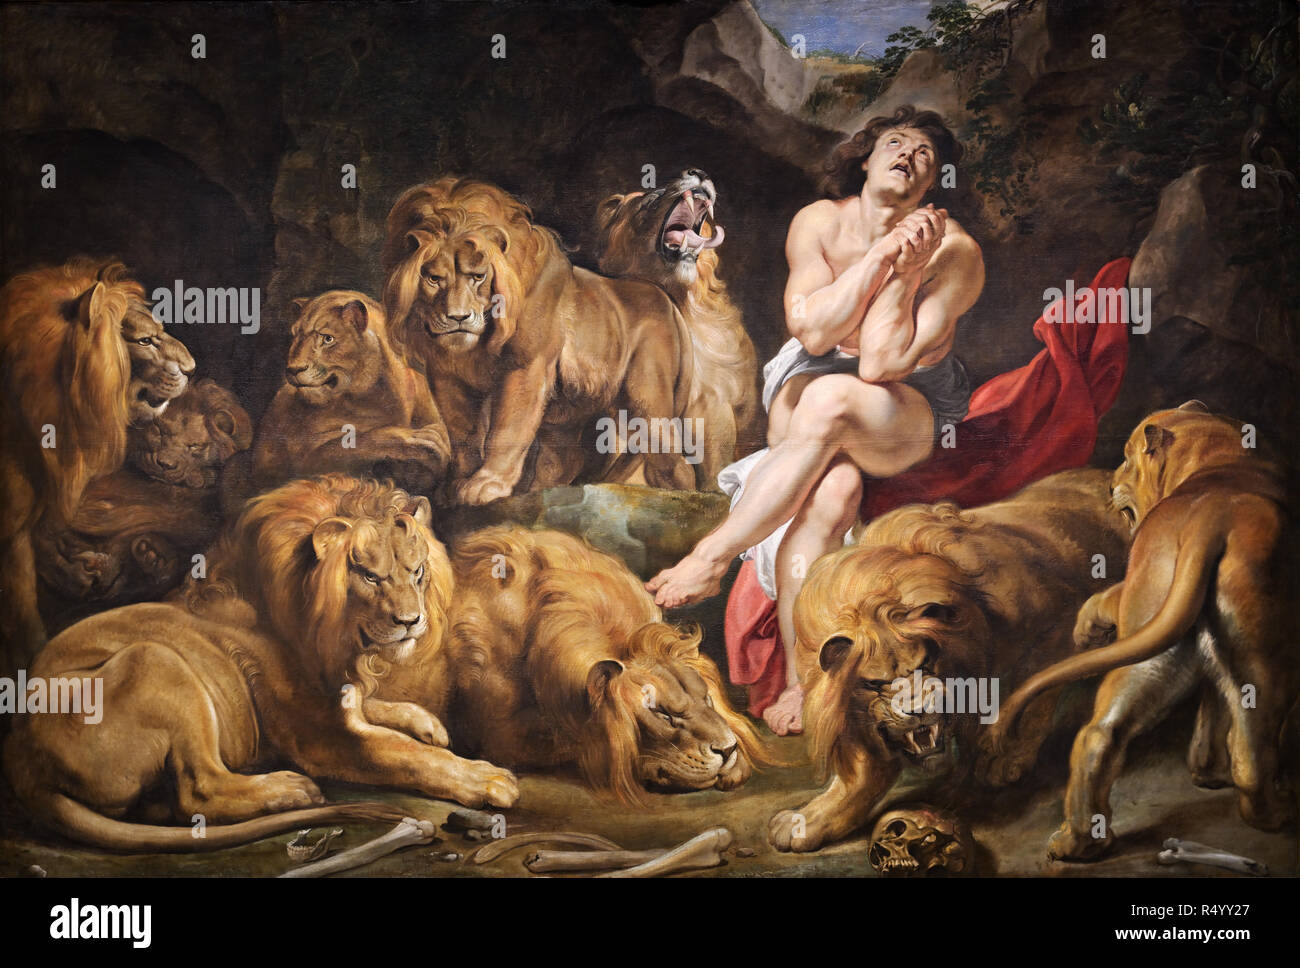 Rubens painting, Daniel in the Lions Den, 1614/1616, Sir Peter Paul Rubens  Stock Photo - Alamy